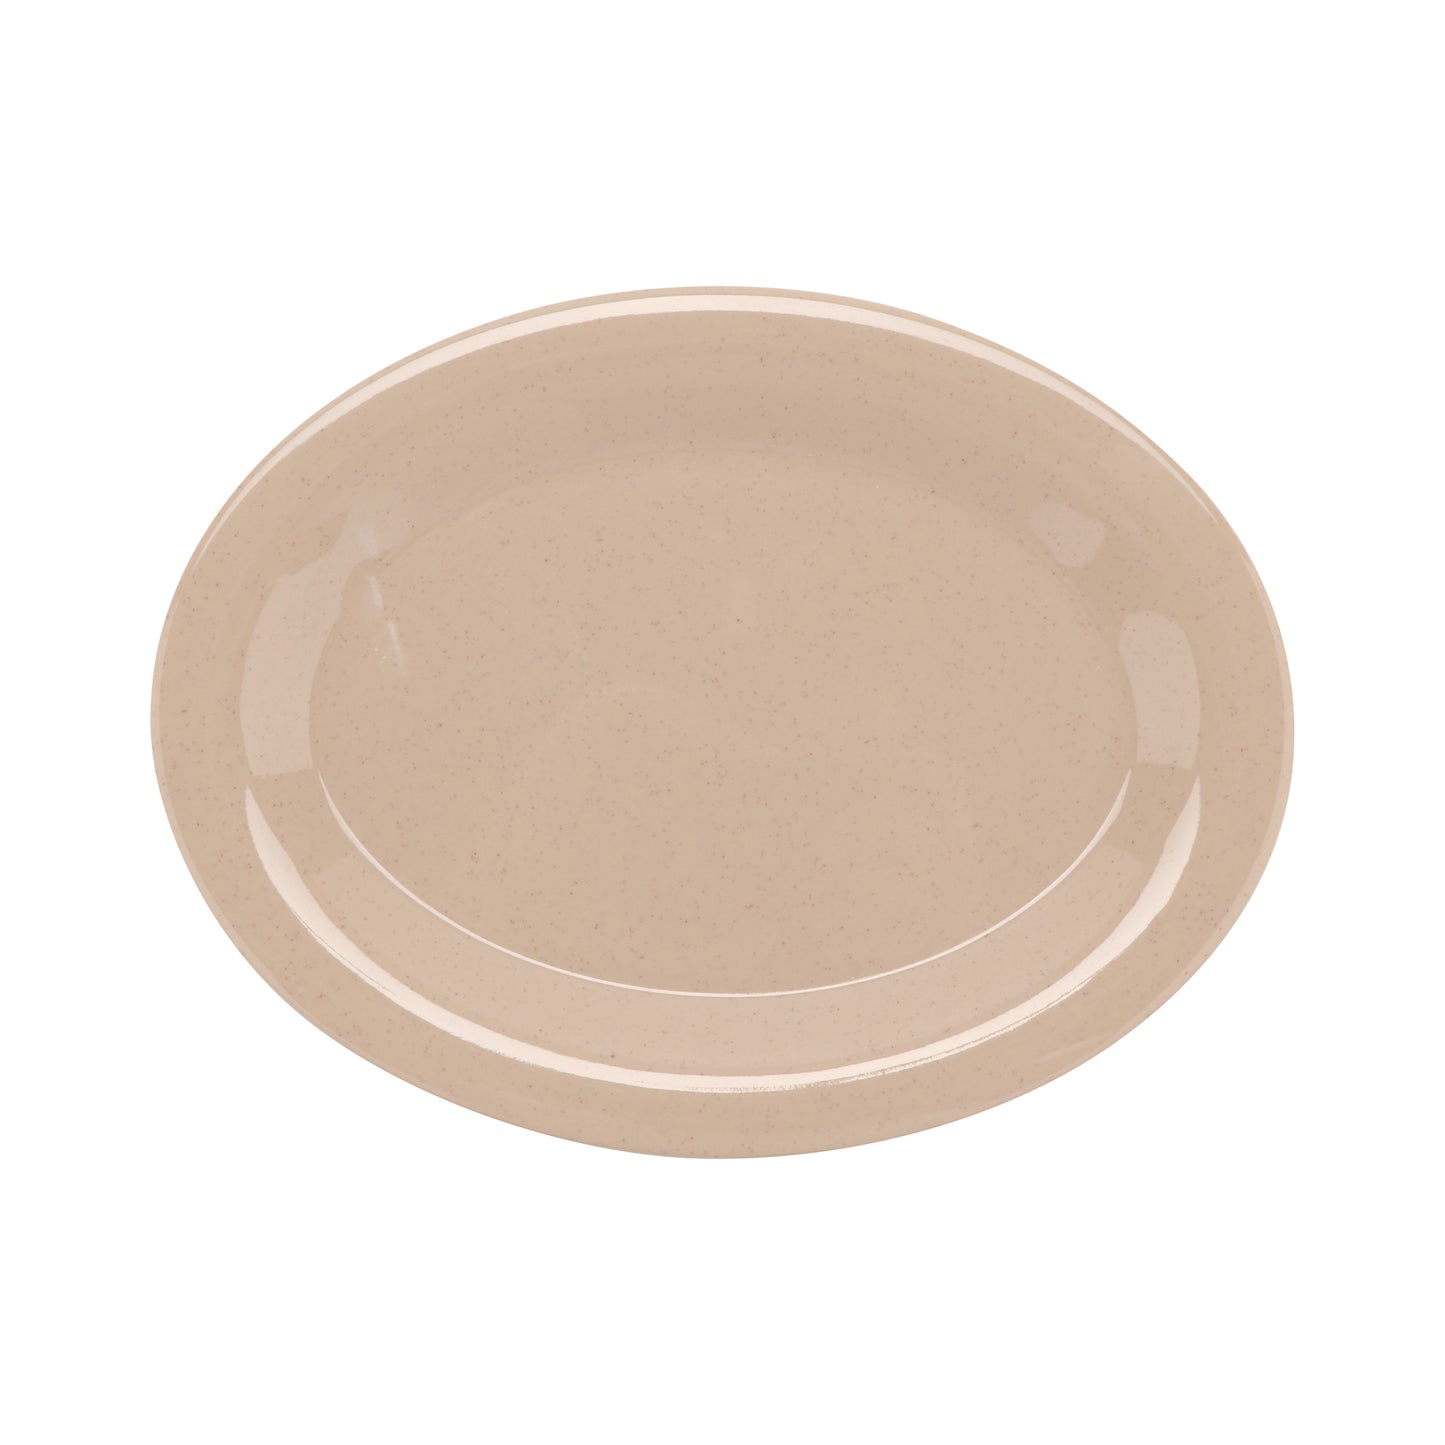 9.75" x 7.25" Oval Platter (12 Pack)